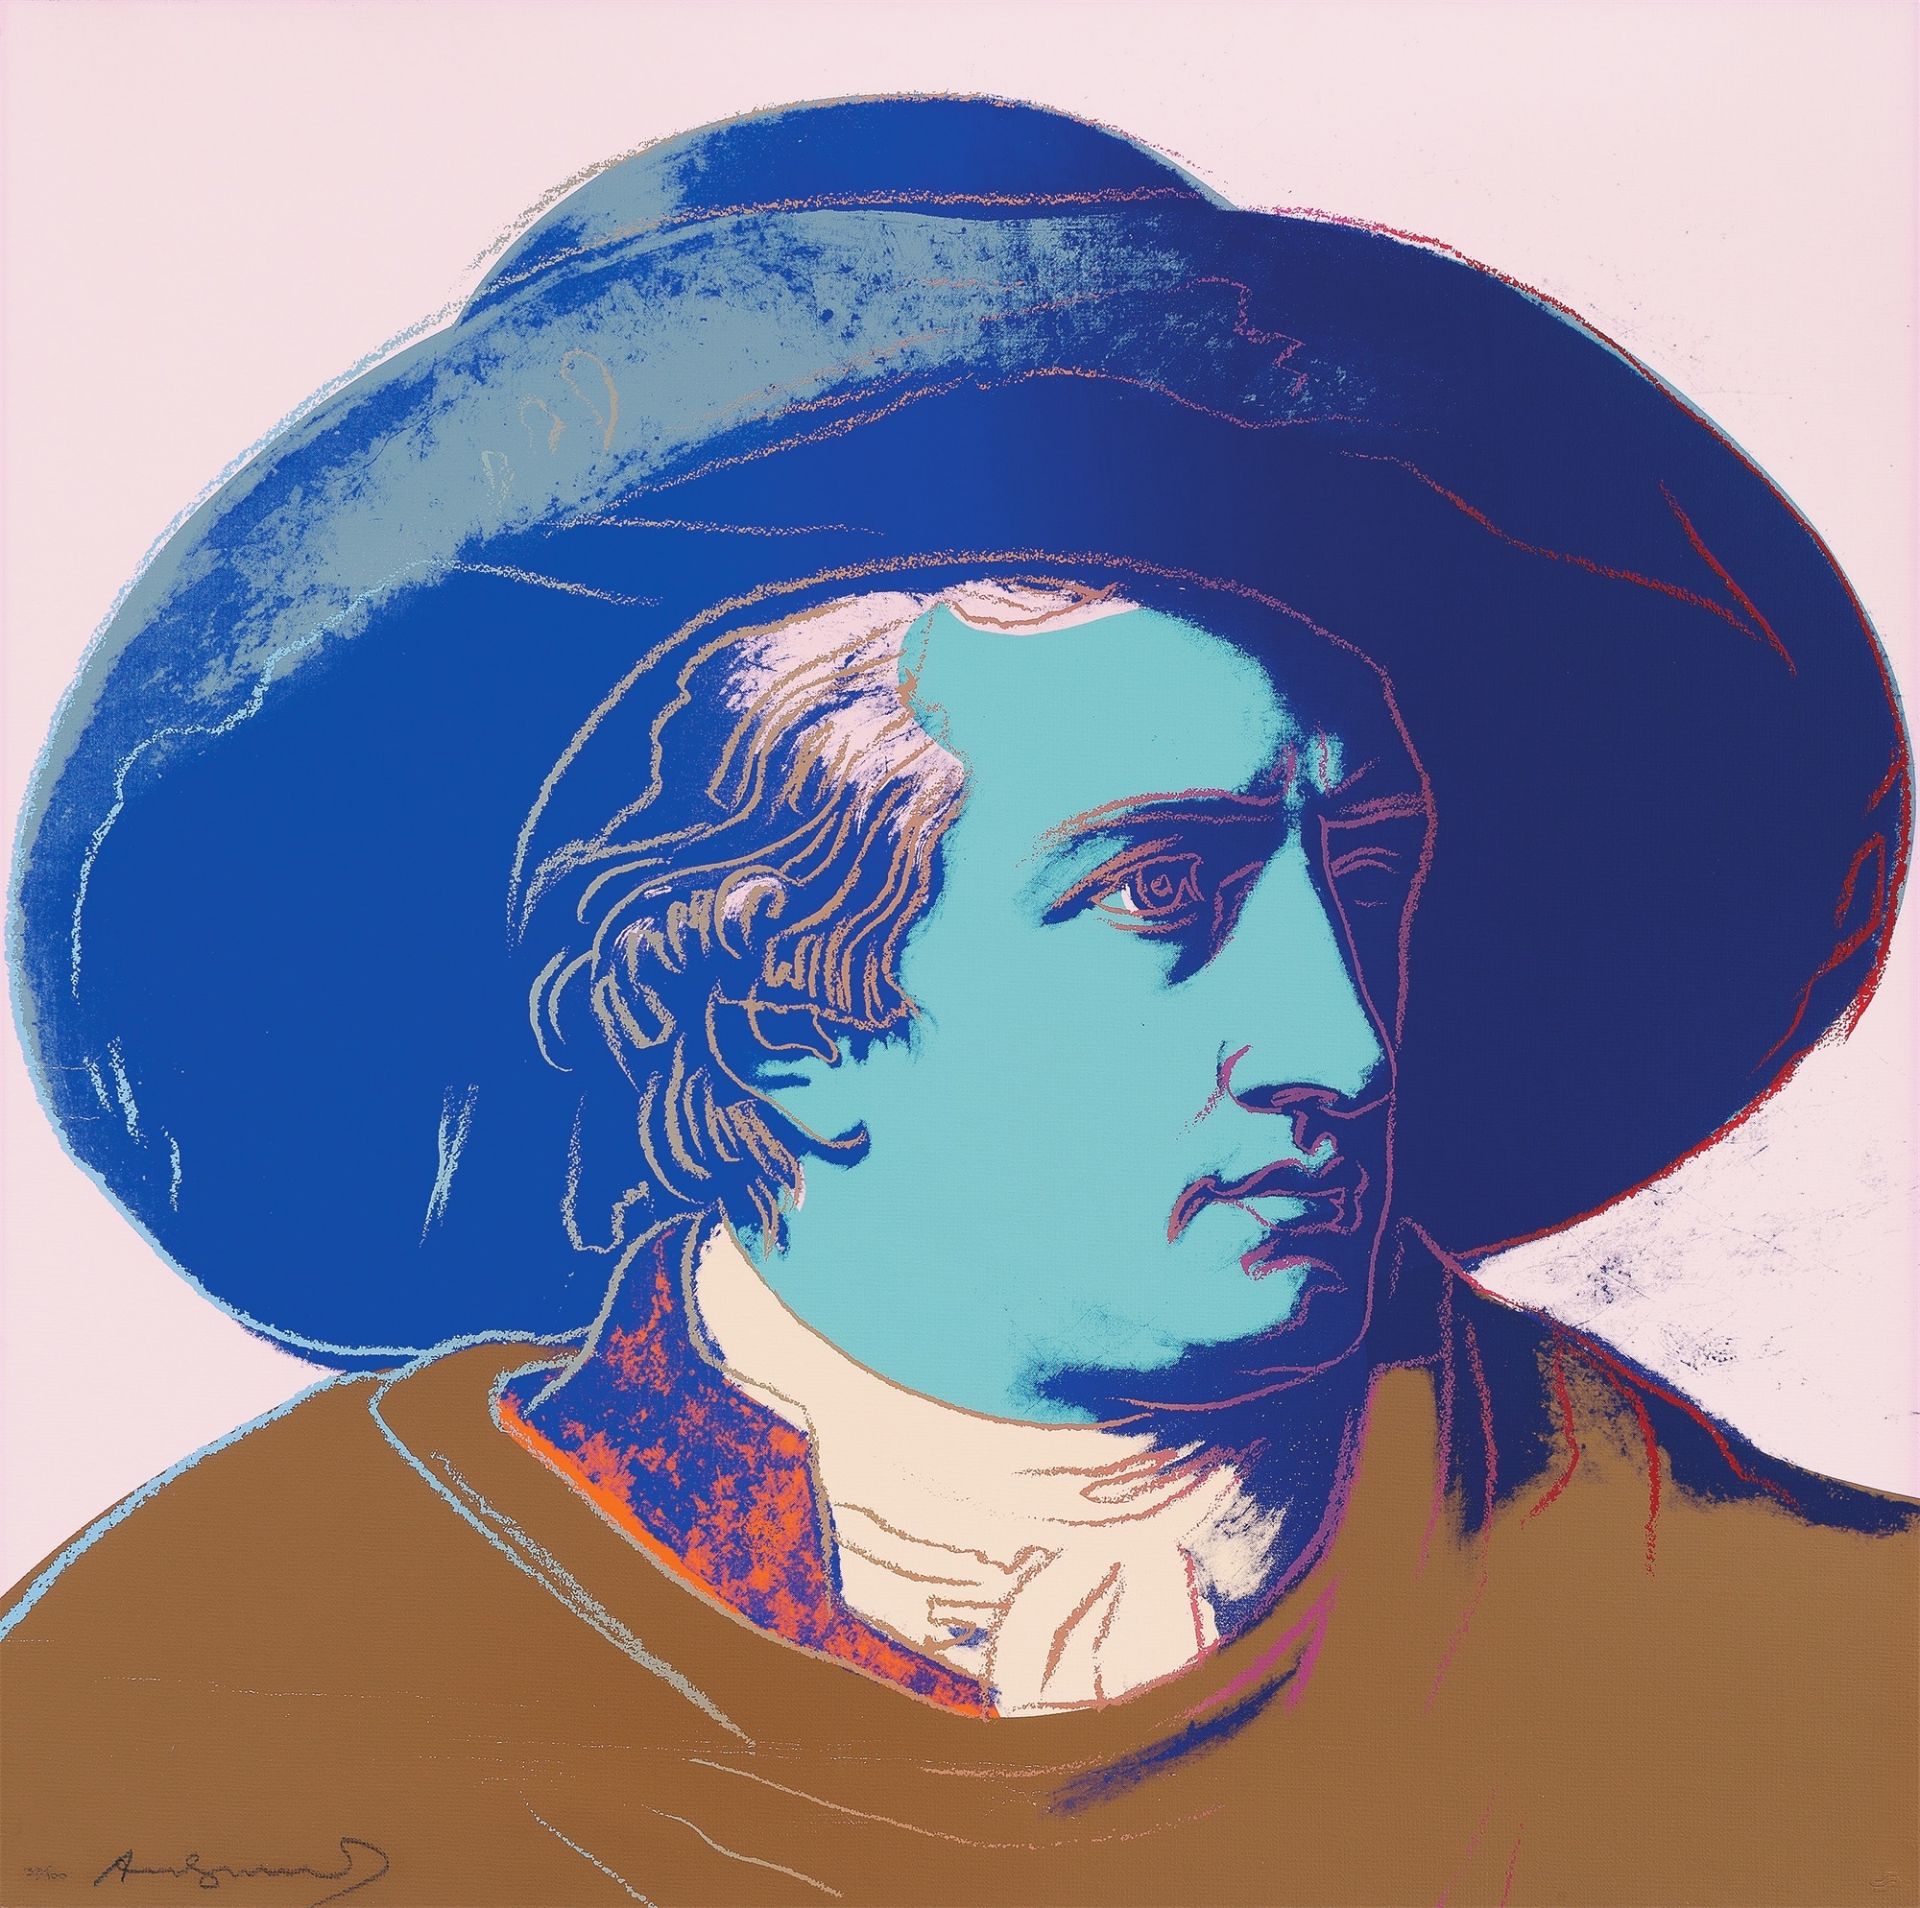 Andy Warhol. ”Goethe”. 1982